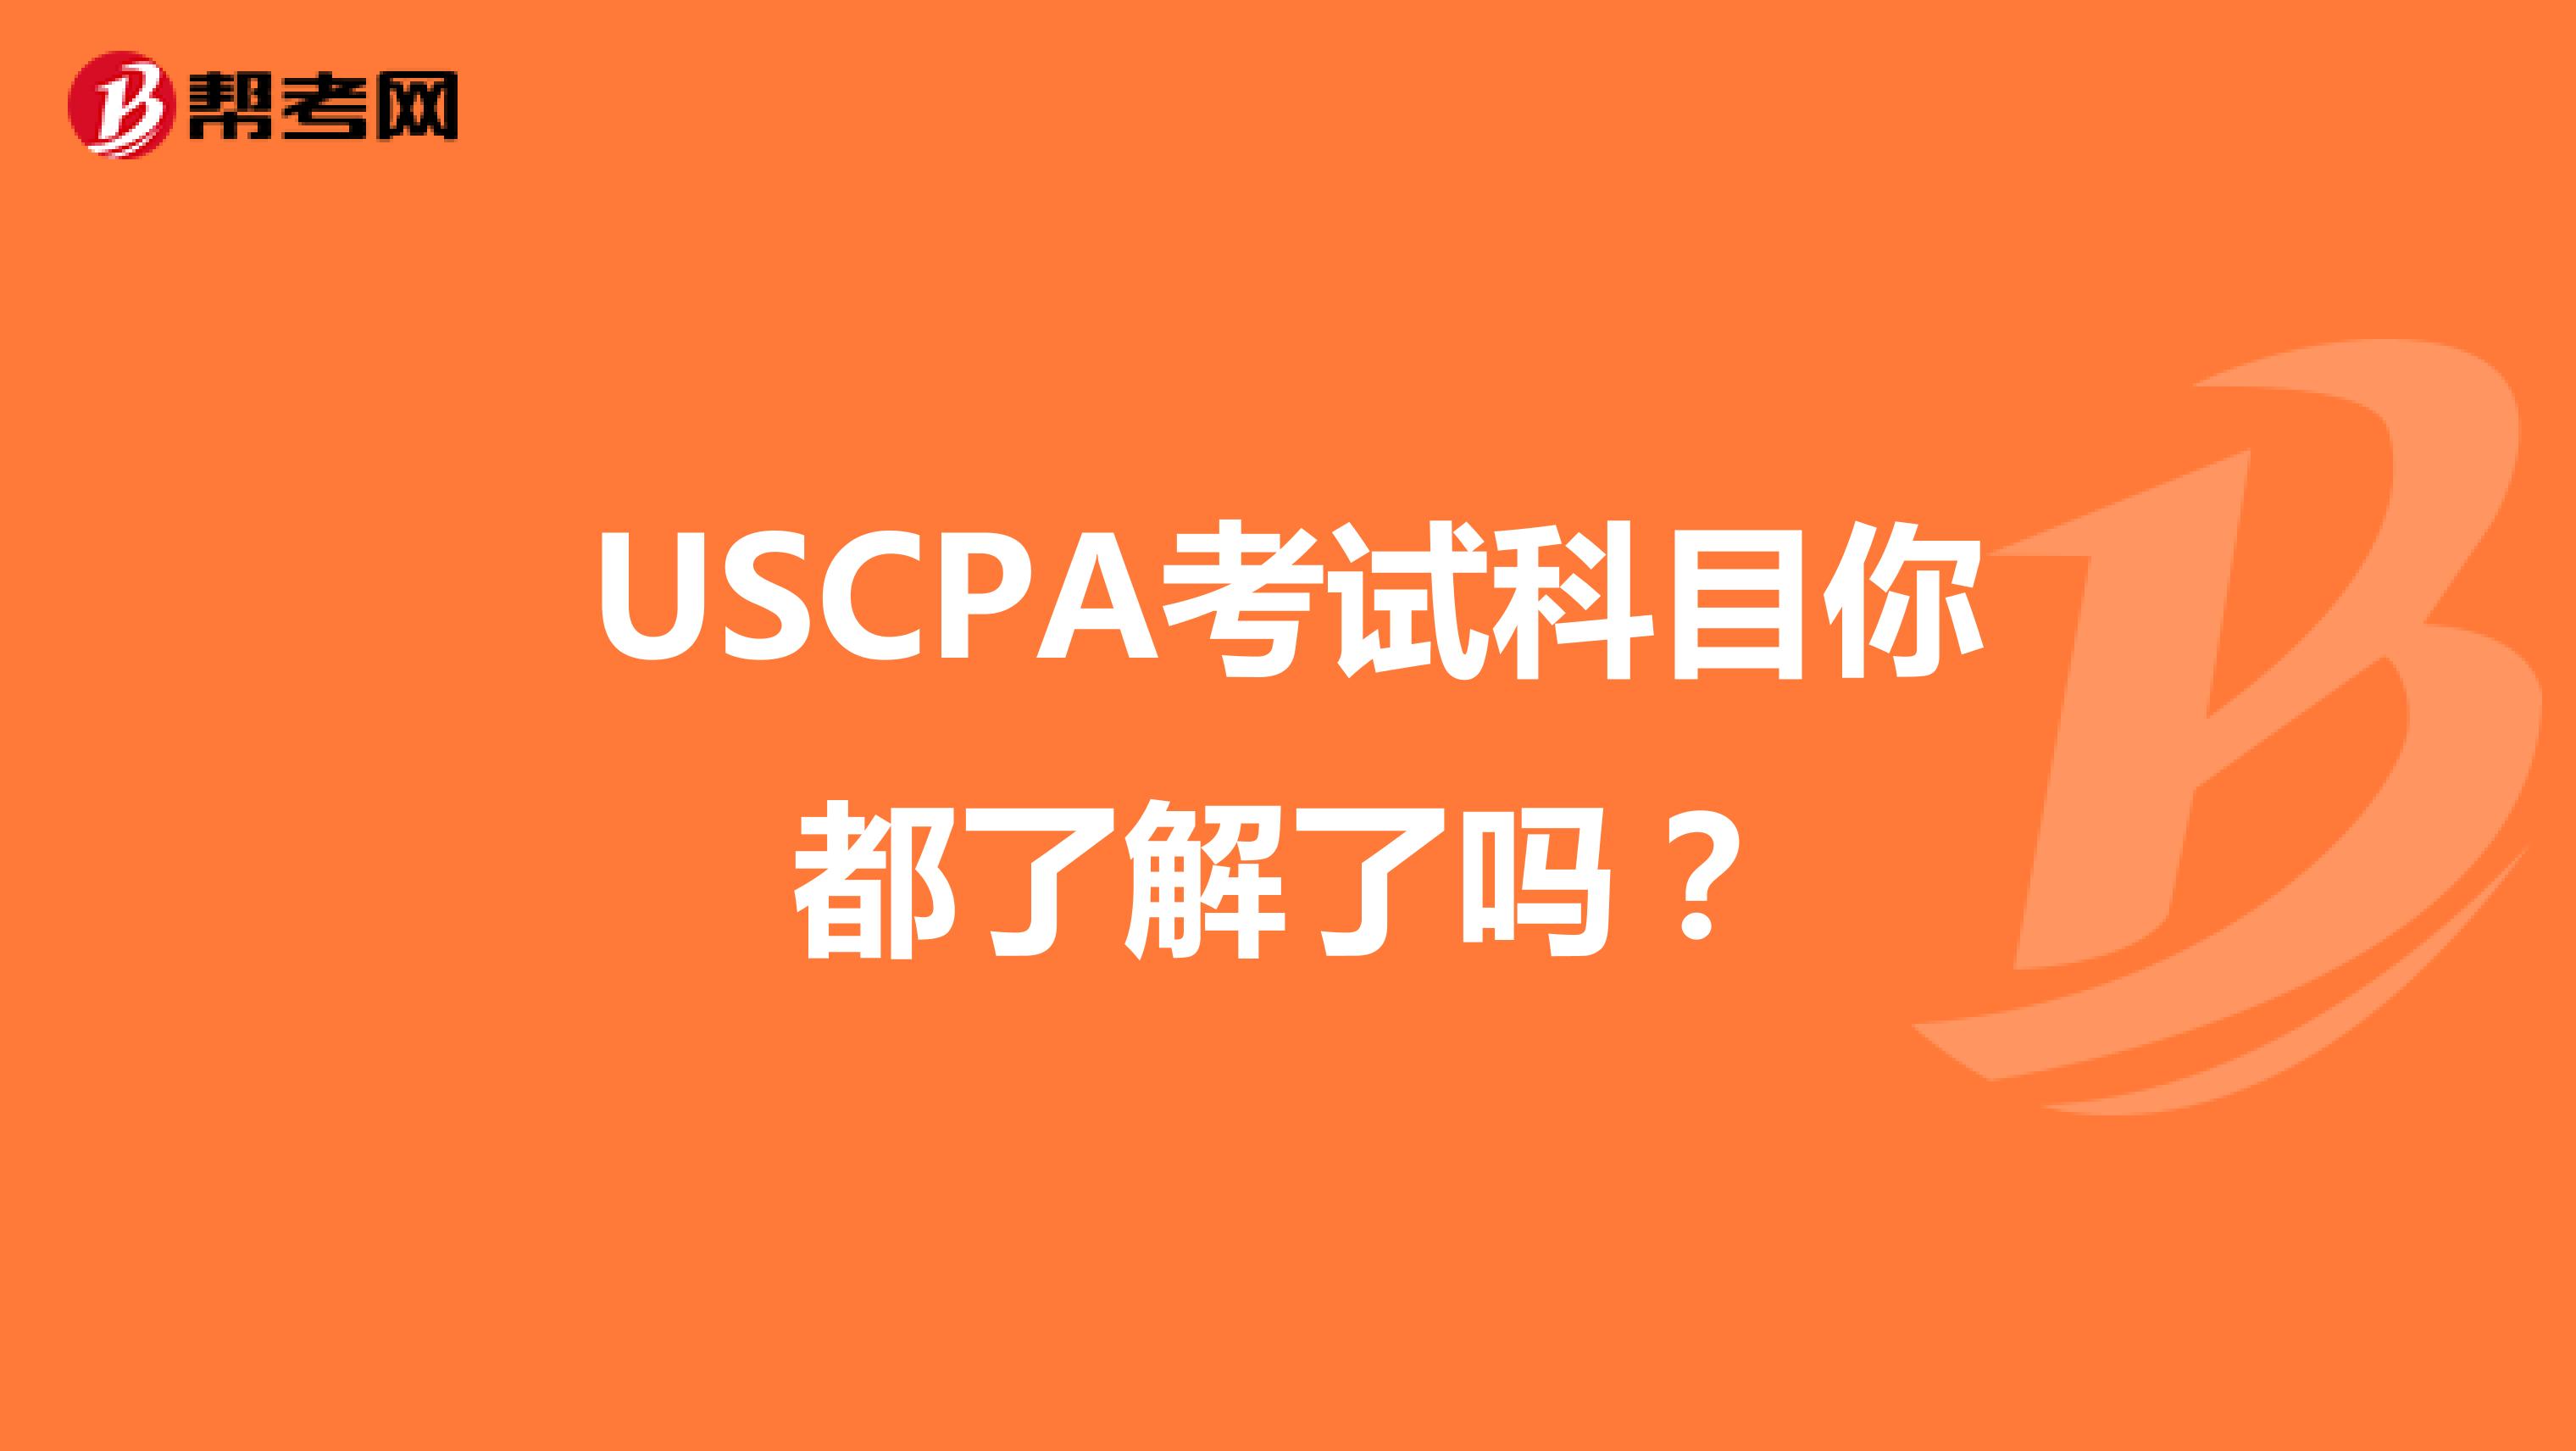 USCPA考试科目你都了解了吗？